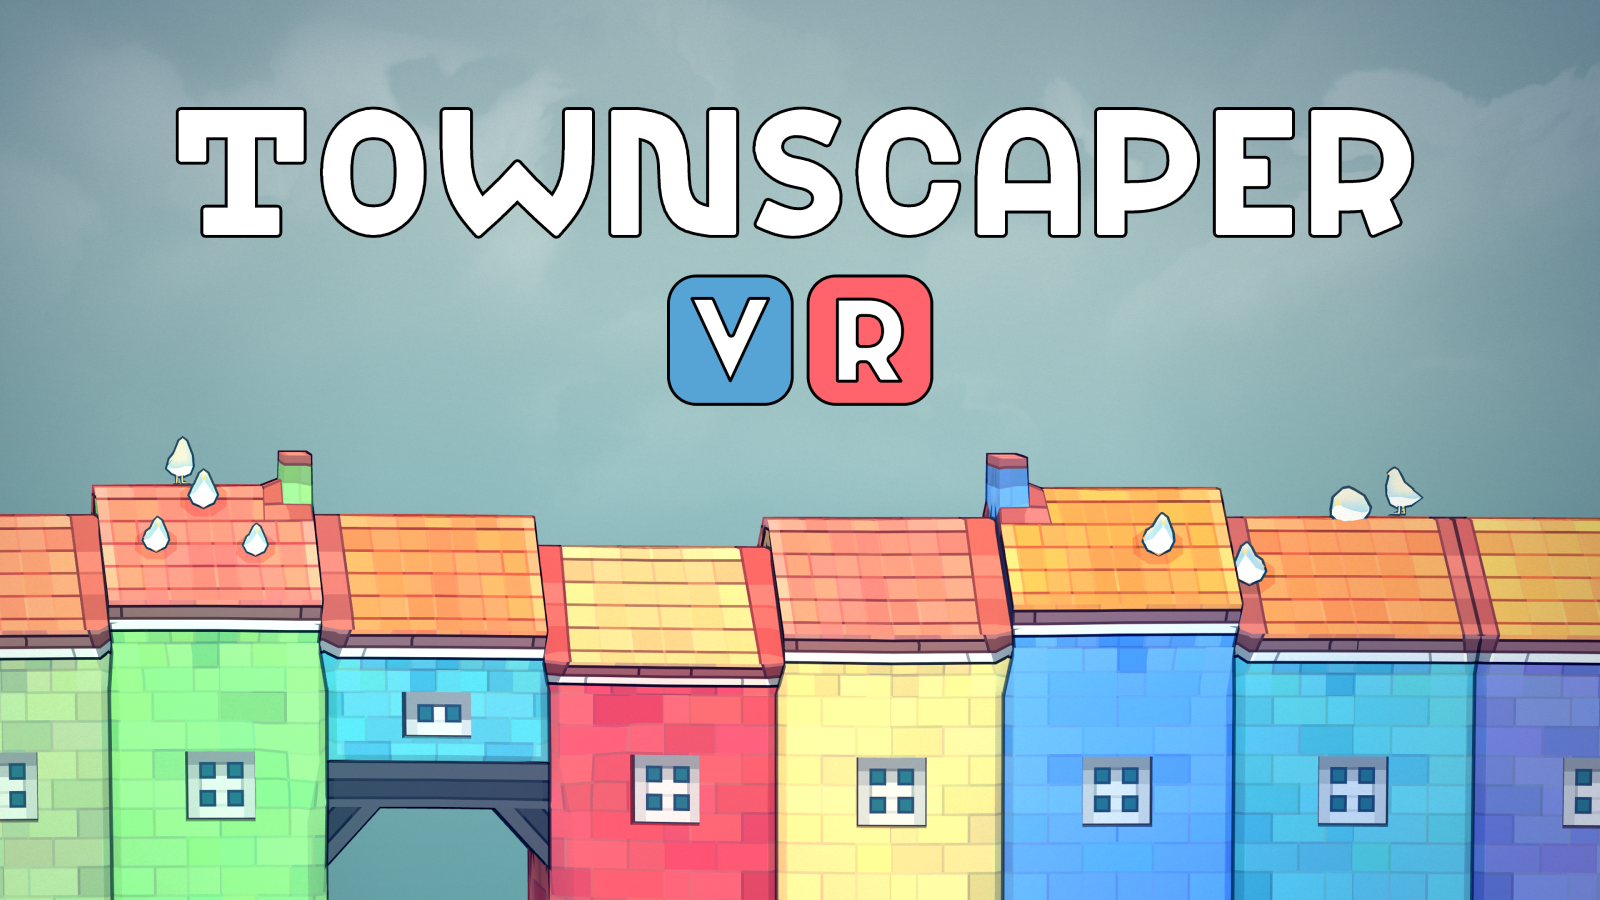 Townscaper VR artwork